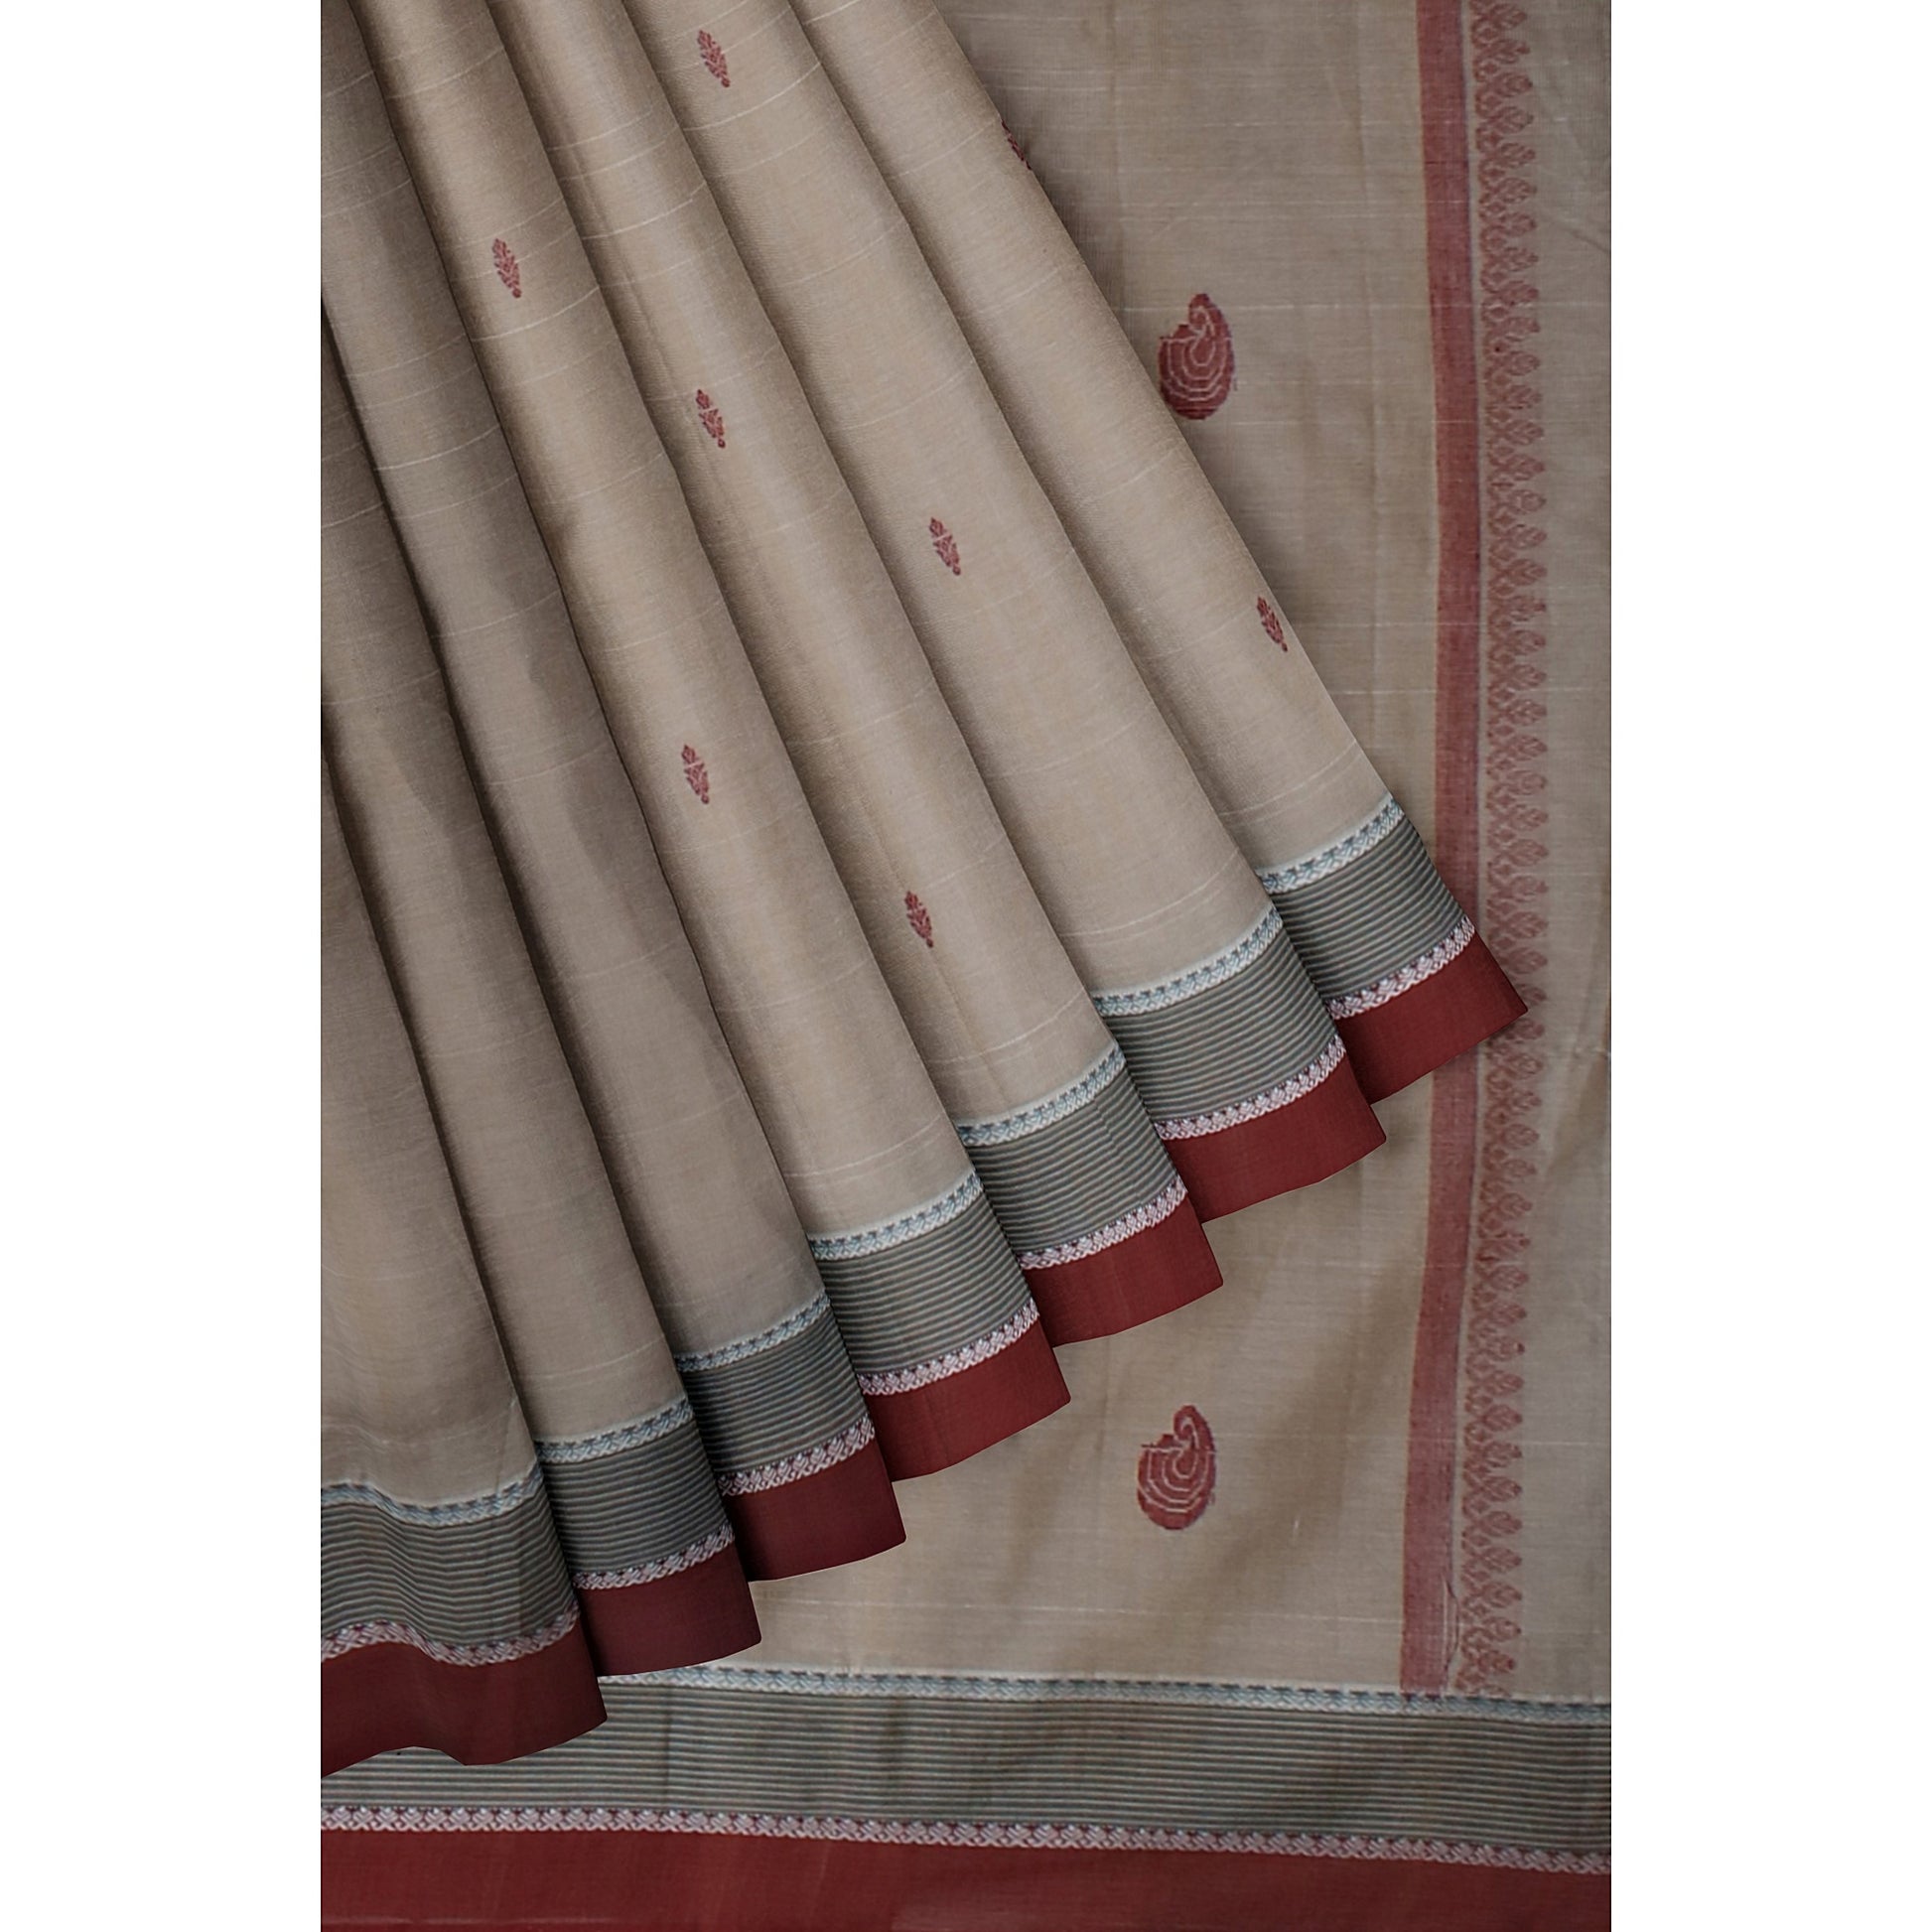 Kavya - Cream with Maroon Buta and Grey Double Border Pure Cotton Handloom Saree freeshipping - Shreni Samudaya